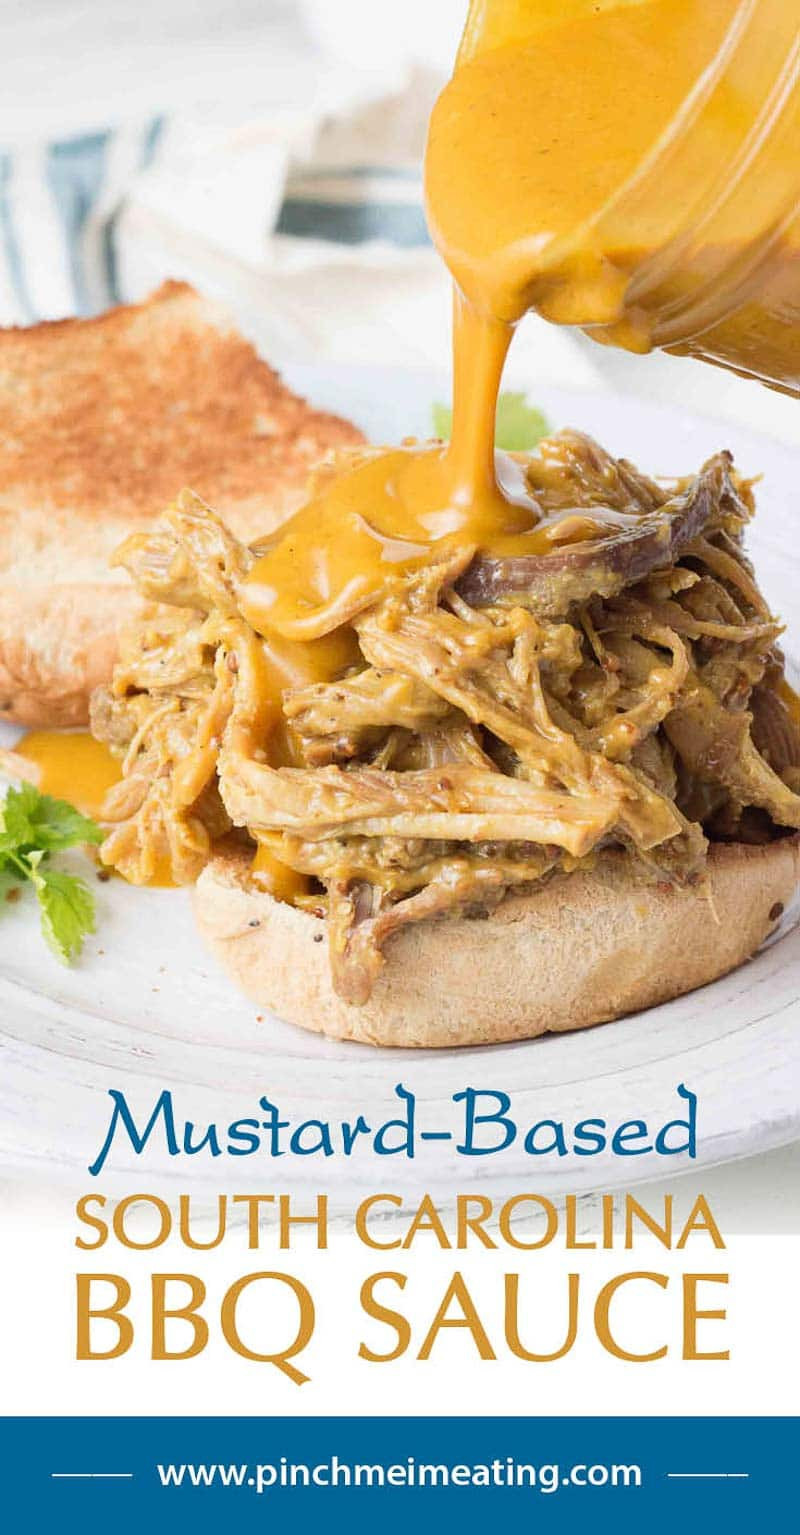 Mustard Base Bbq Sauce Recipe
 Mustard Based South Carolina BBQ Sauce